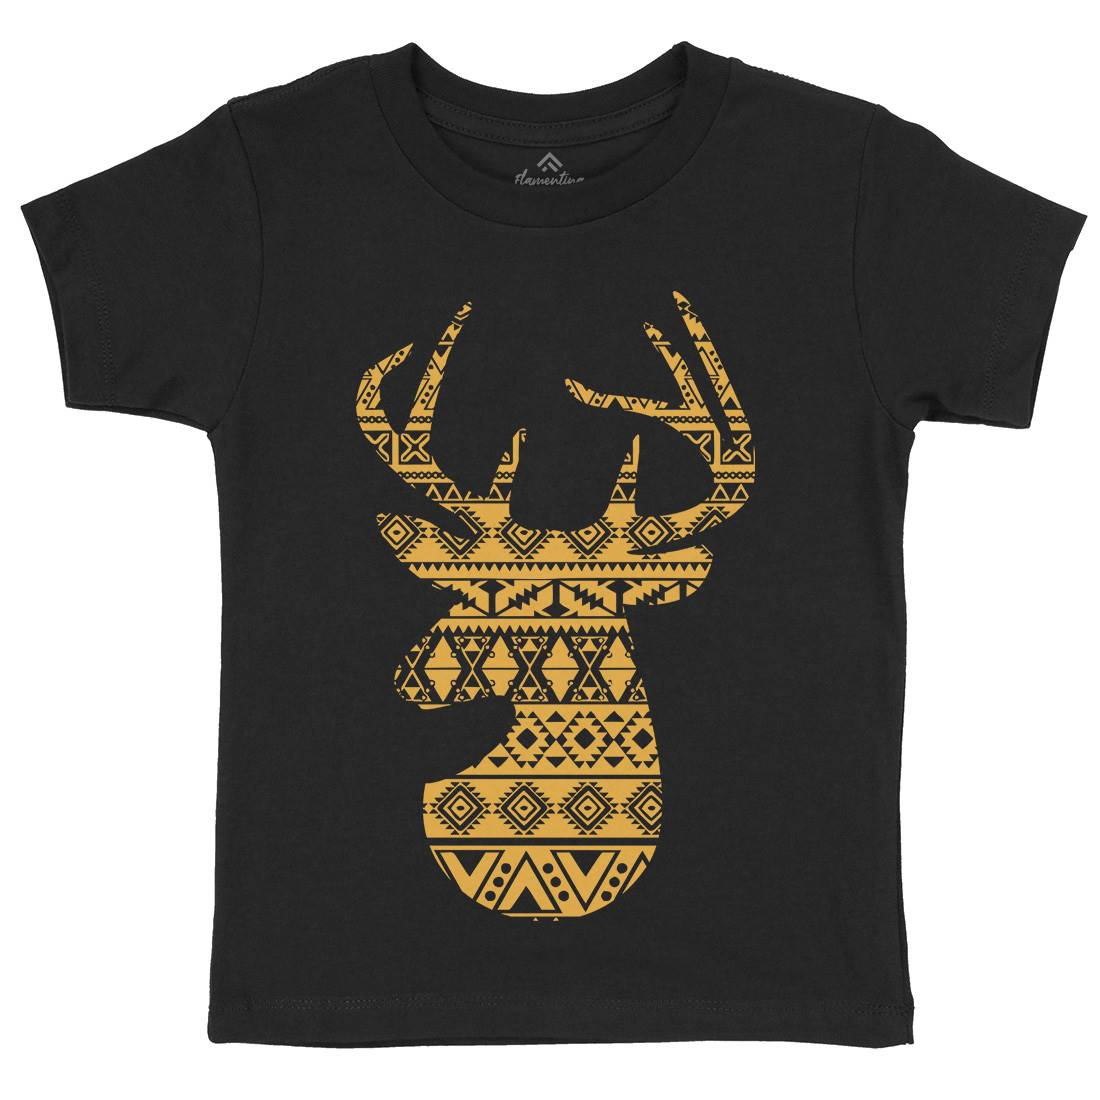 Deer Kids Organic Crew Neck T-Shirt Animals B024